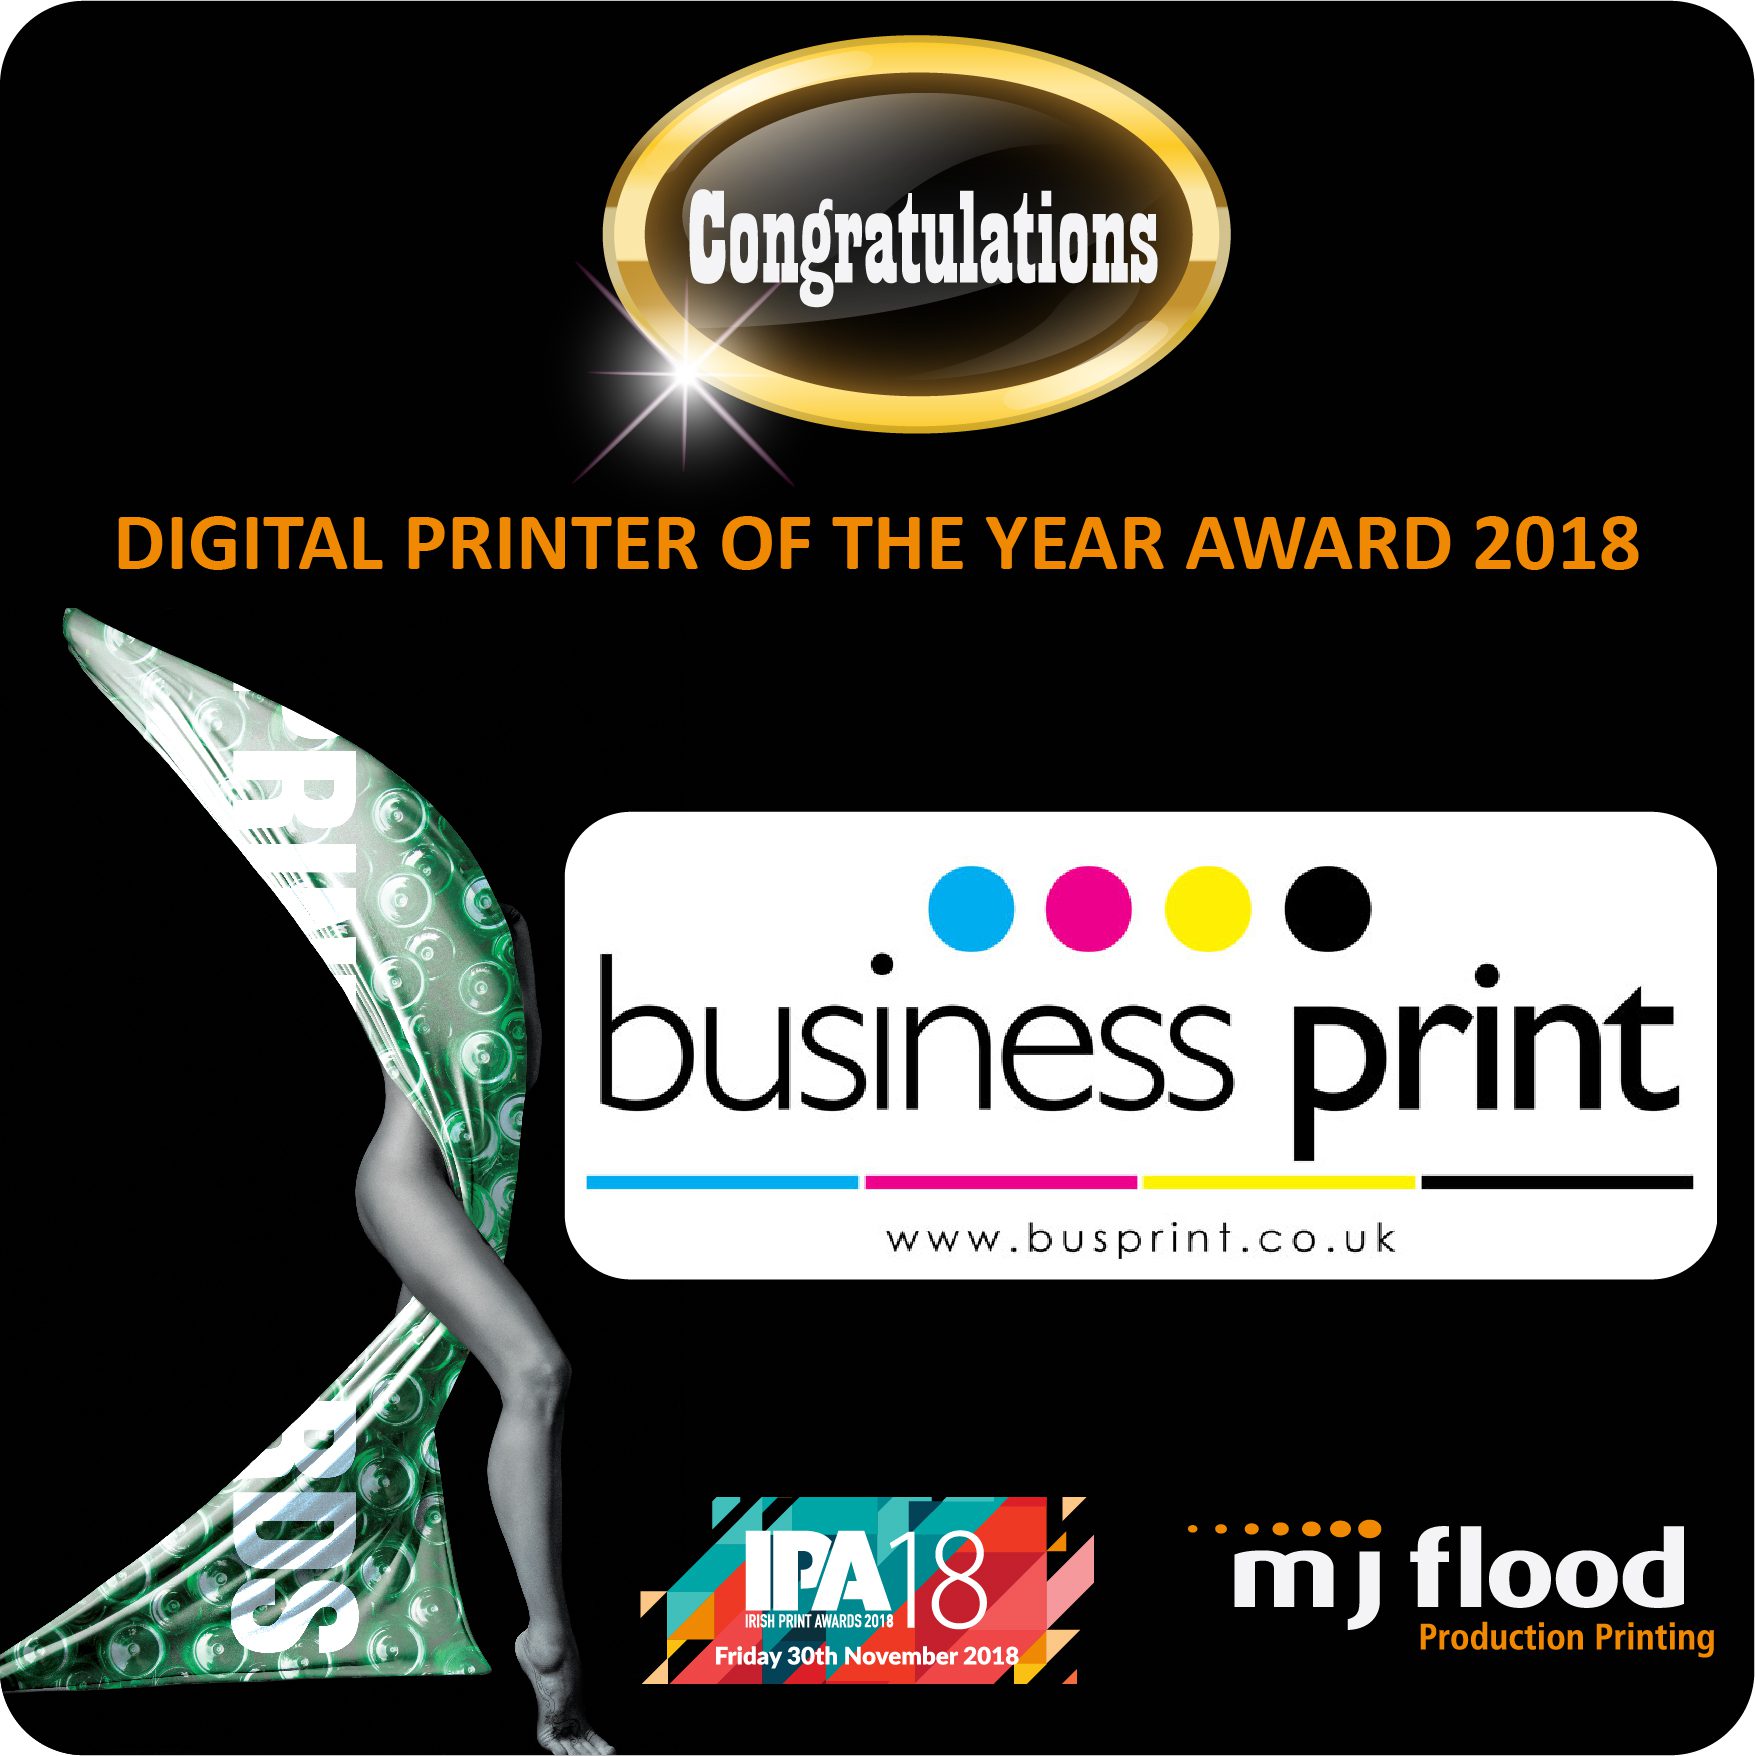 Business Print Ltd wins Digital Printer of the Year Award